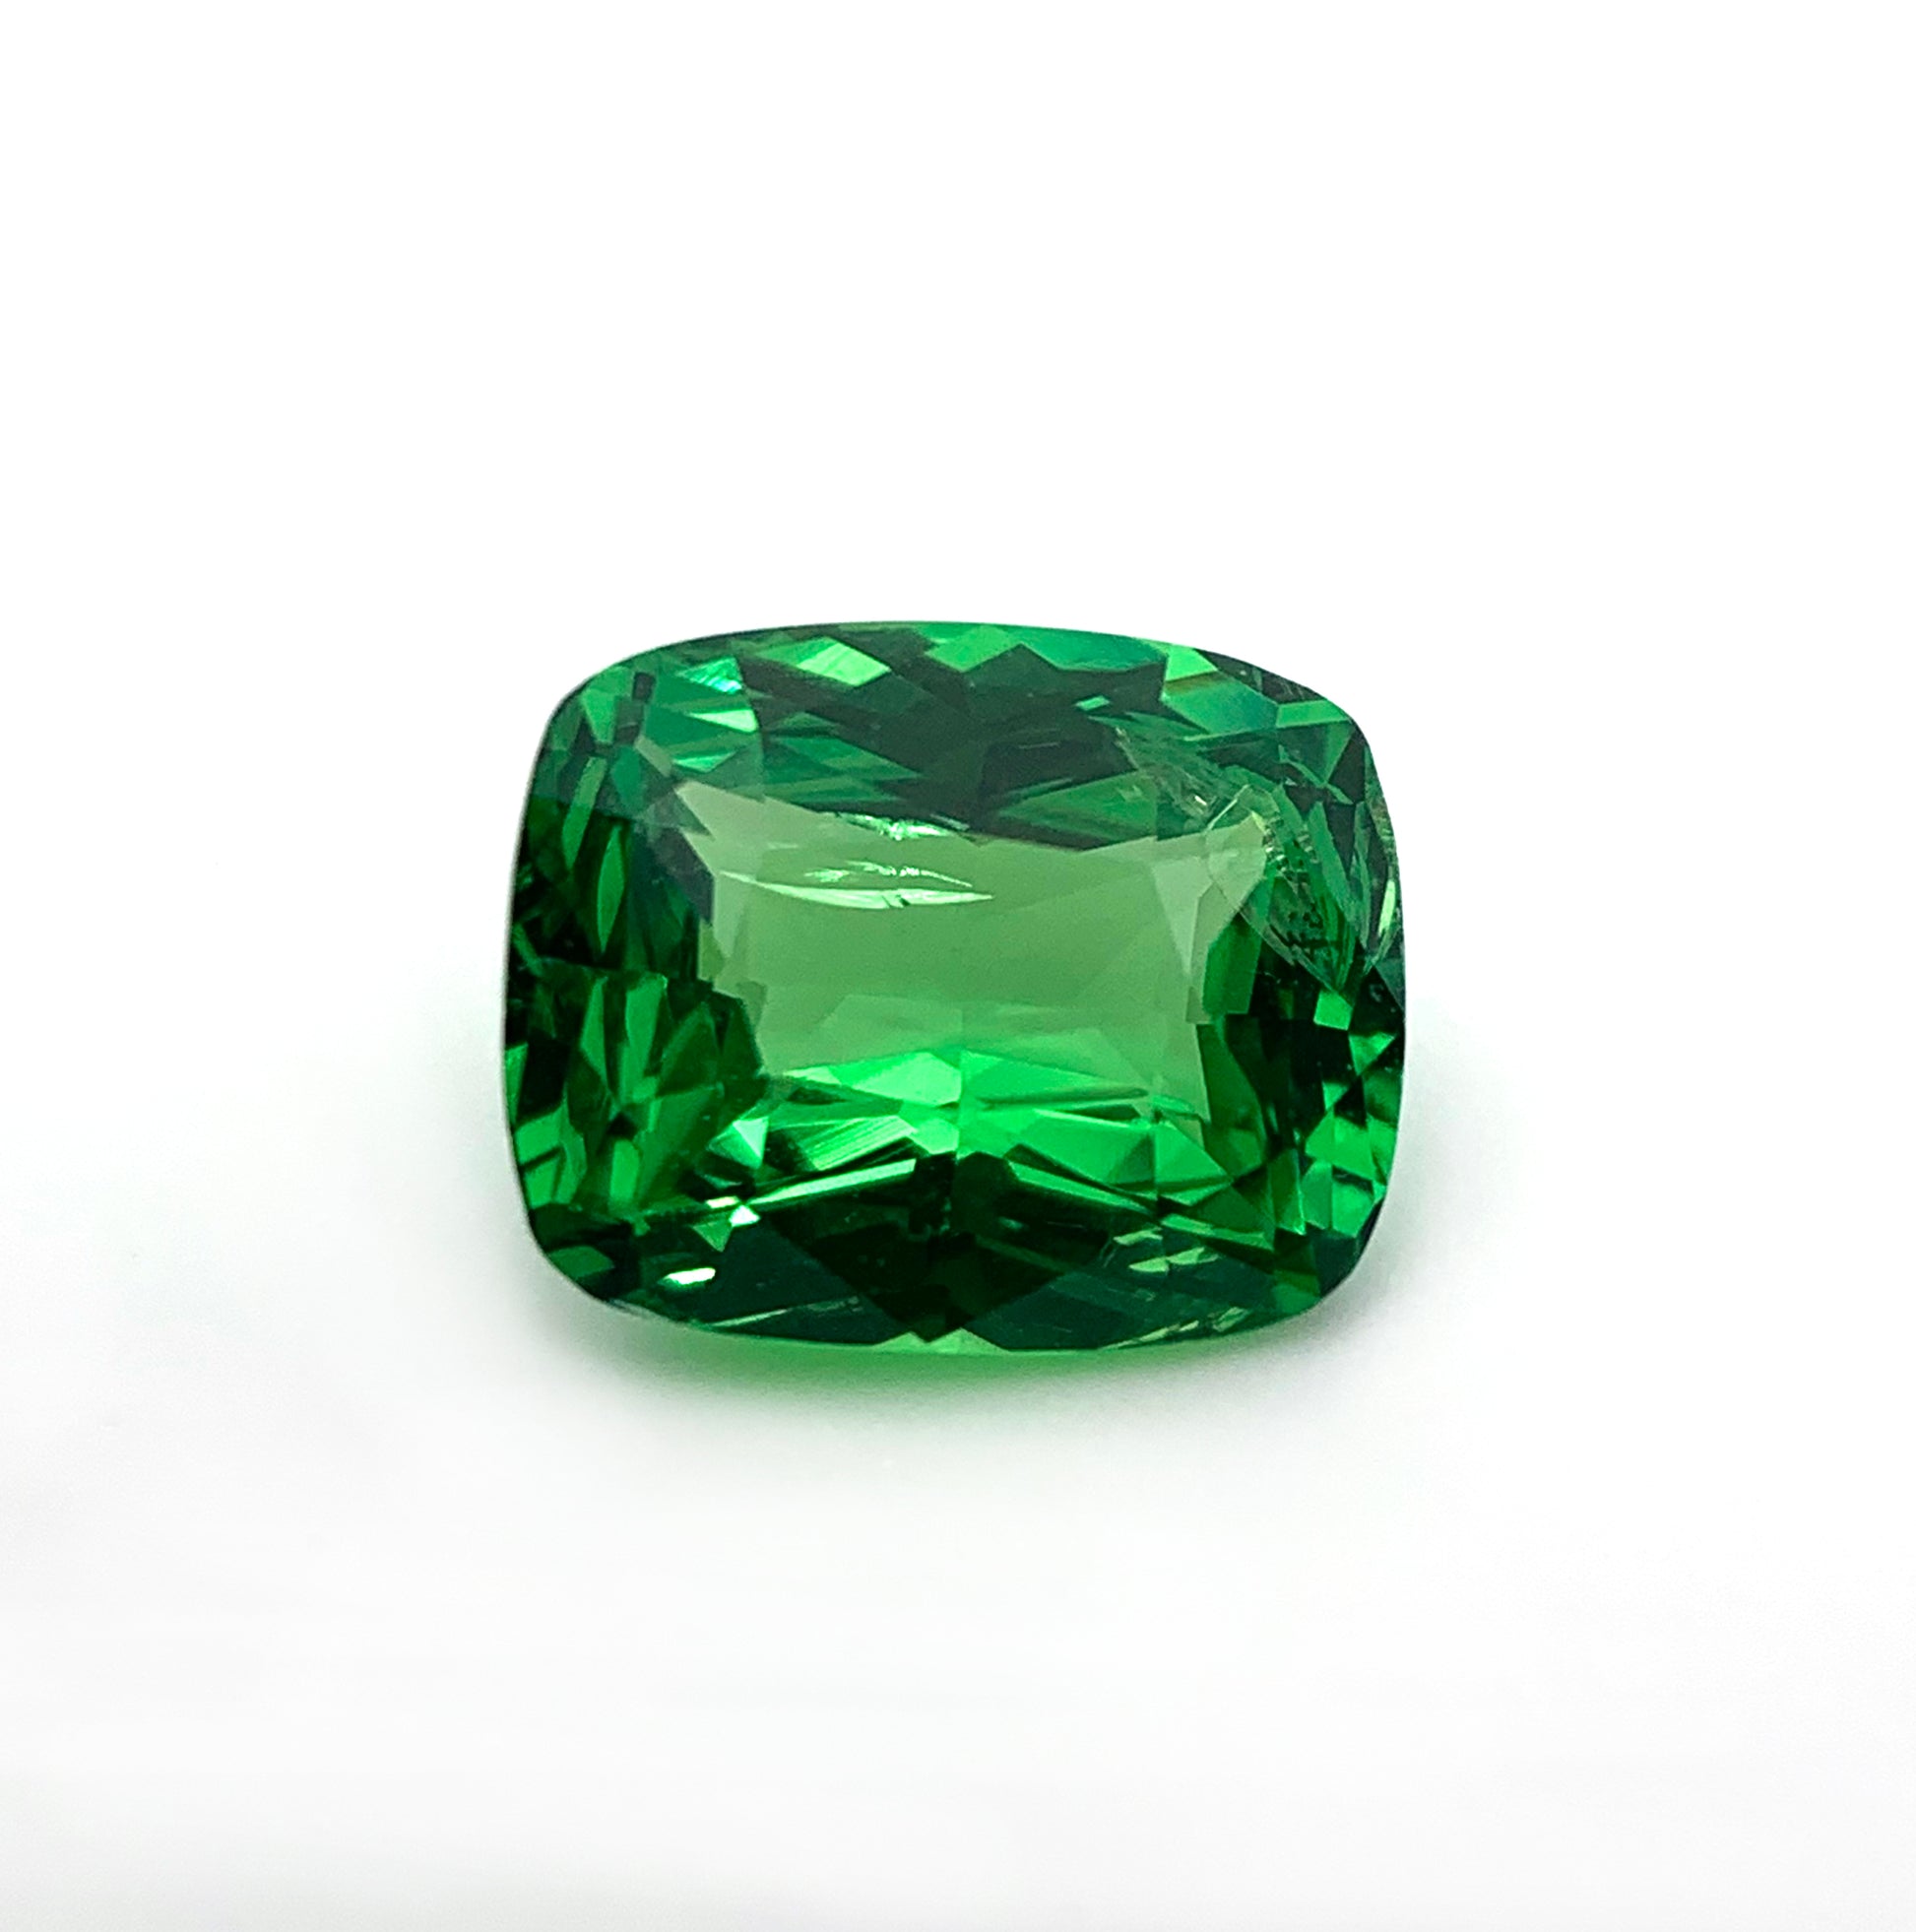 Vivid Green Natural Tsavorire 2.02 crt. for engagement rings, Jewelry, custom jewelry, loose gemstone